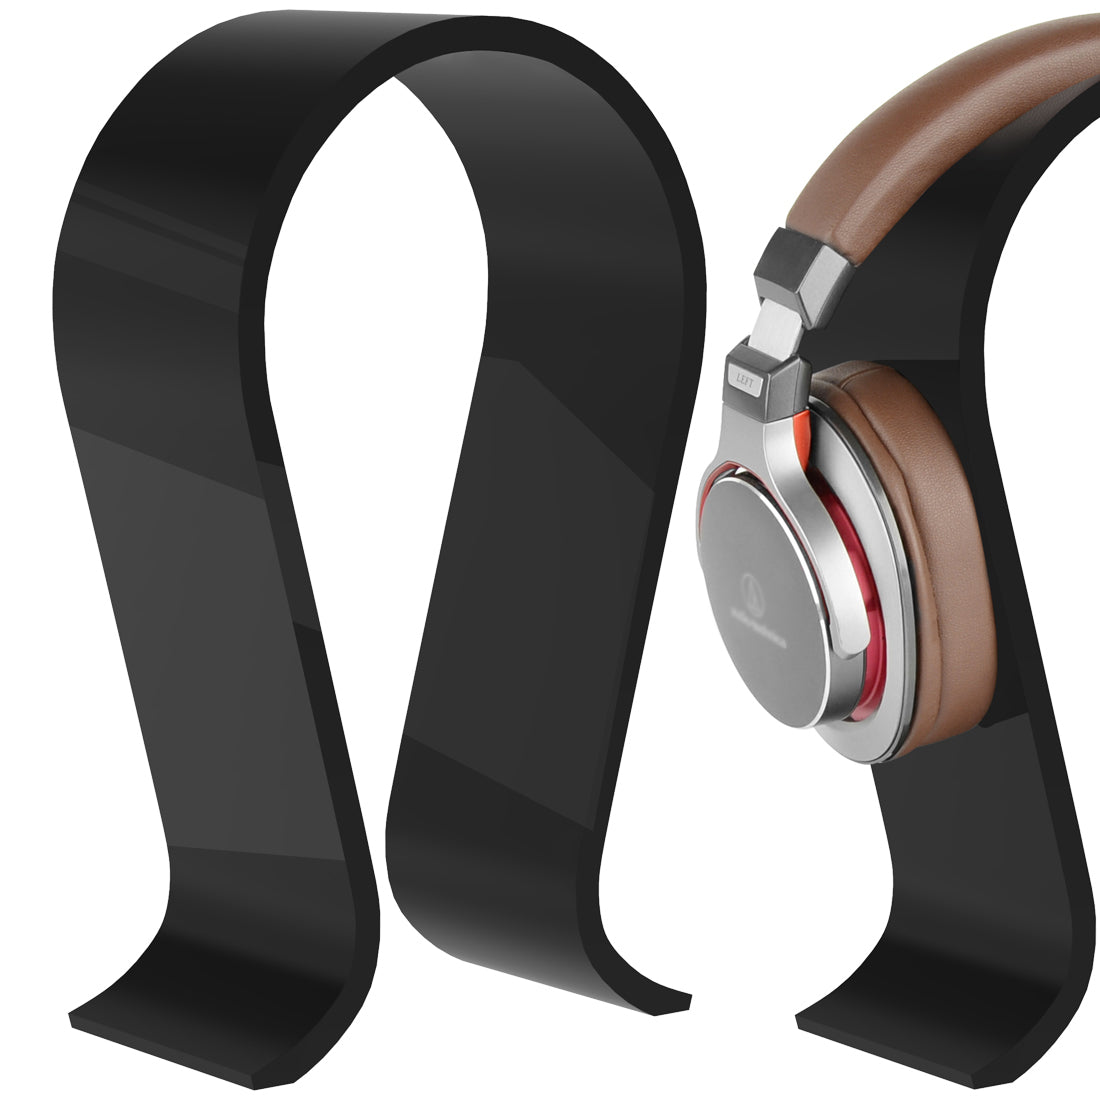 Acrylic Omega Headphones Stand / Headset Holder / Desk Display Hanger, Fit Audio-Technica, Bose QC3, Qc25, QC2, QC15, AE2, AKG, Sennheiser